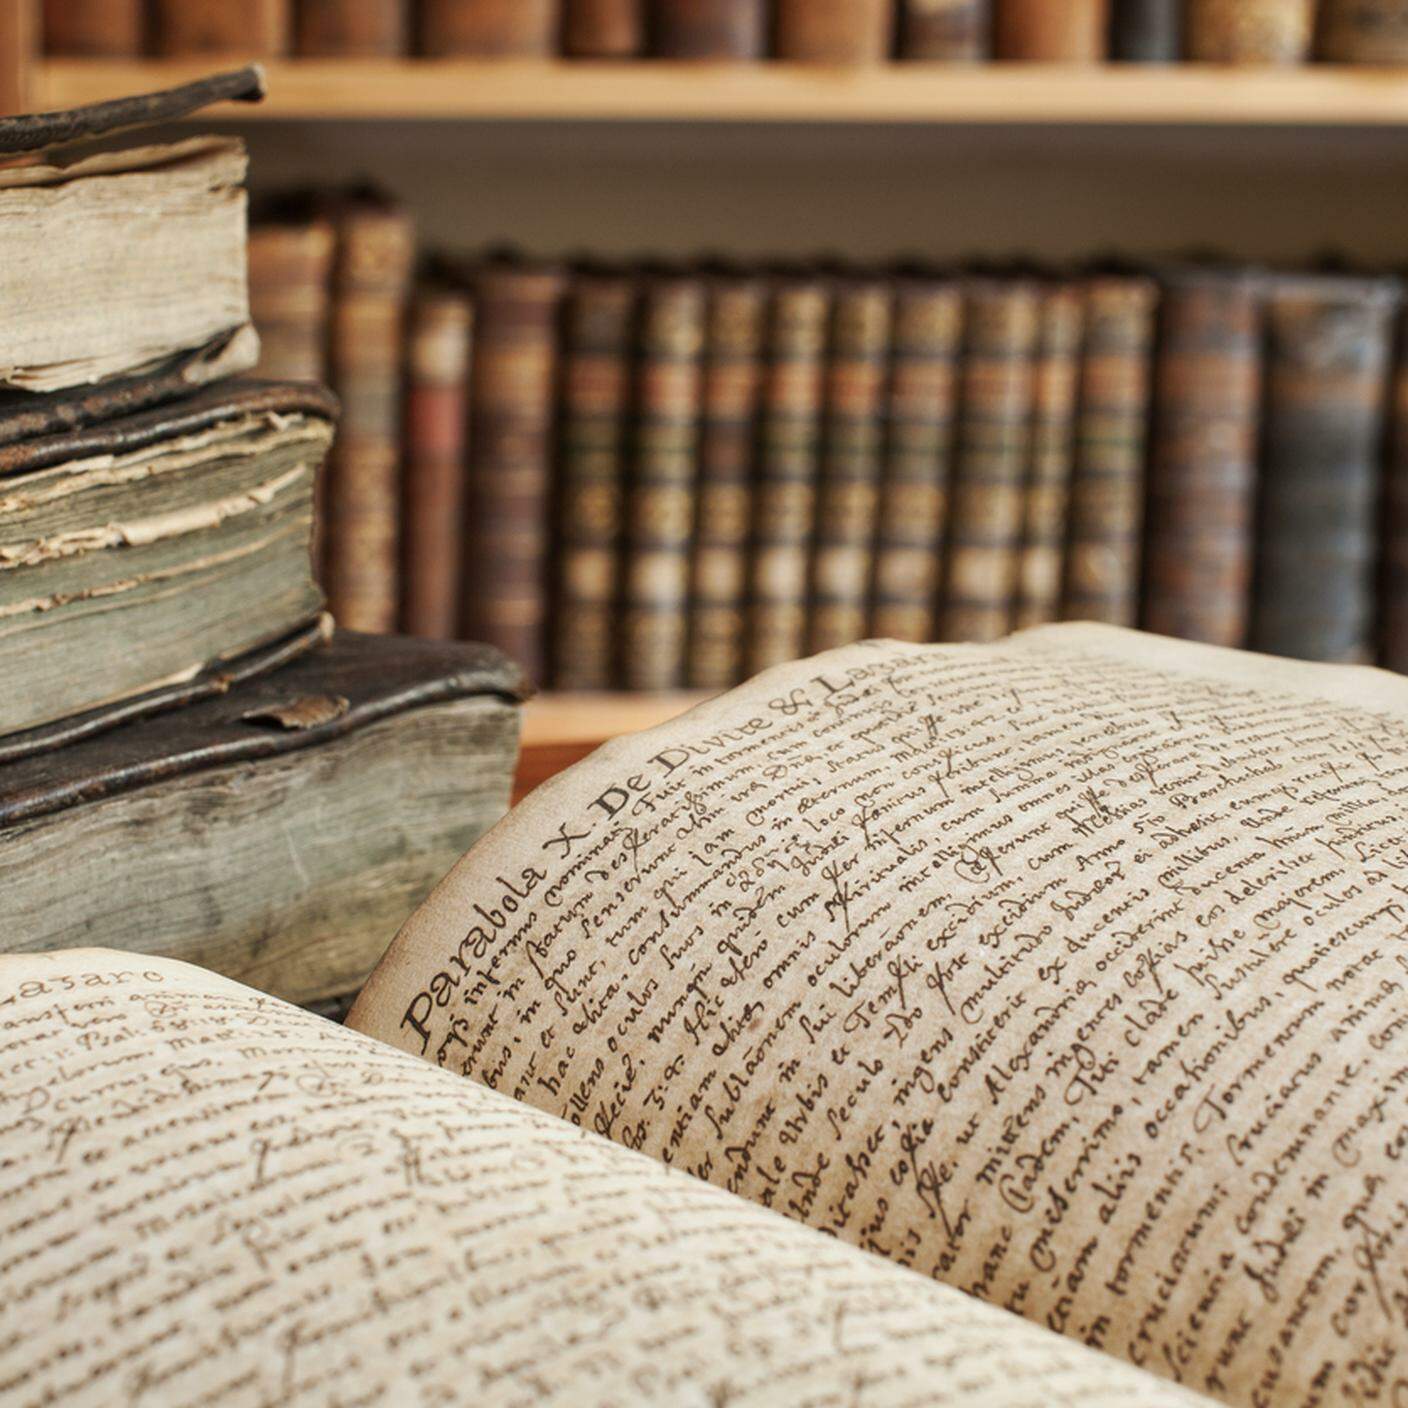 Libro antico in una libreria , leggende, storie